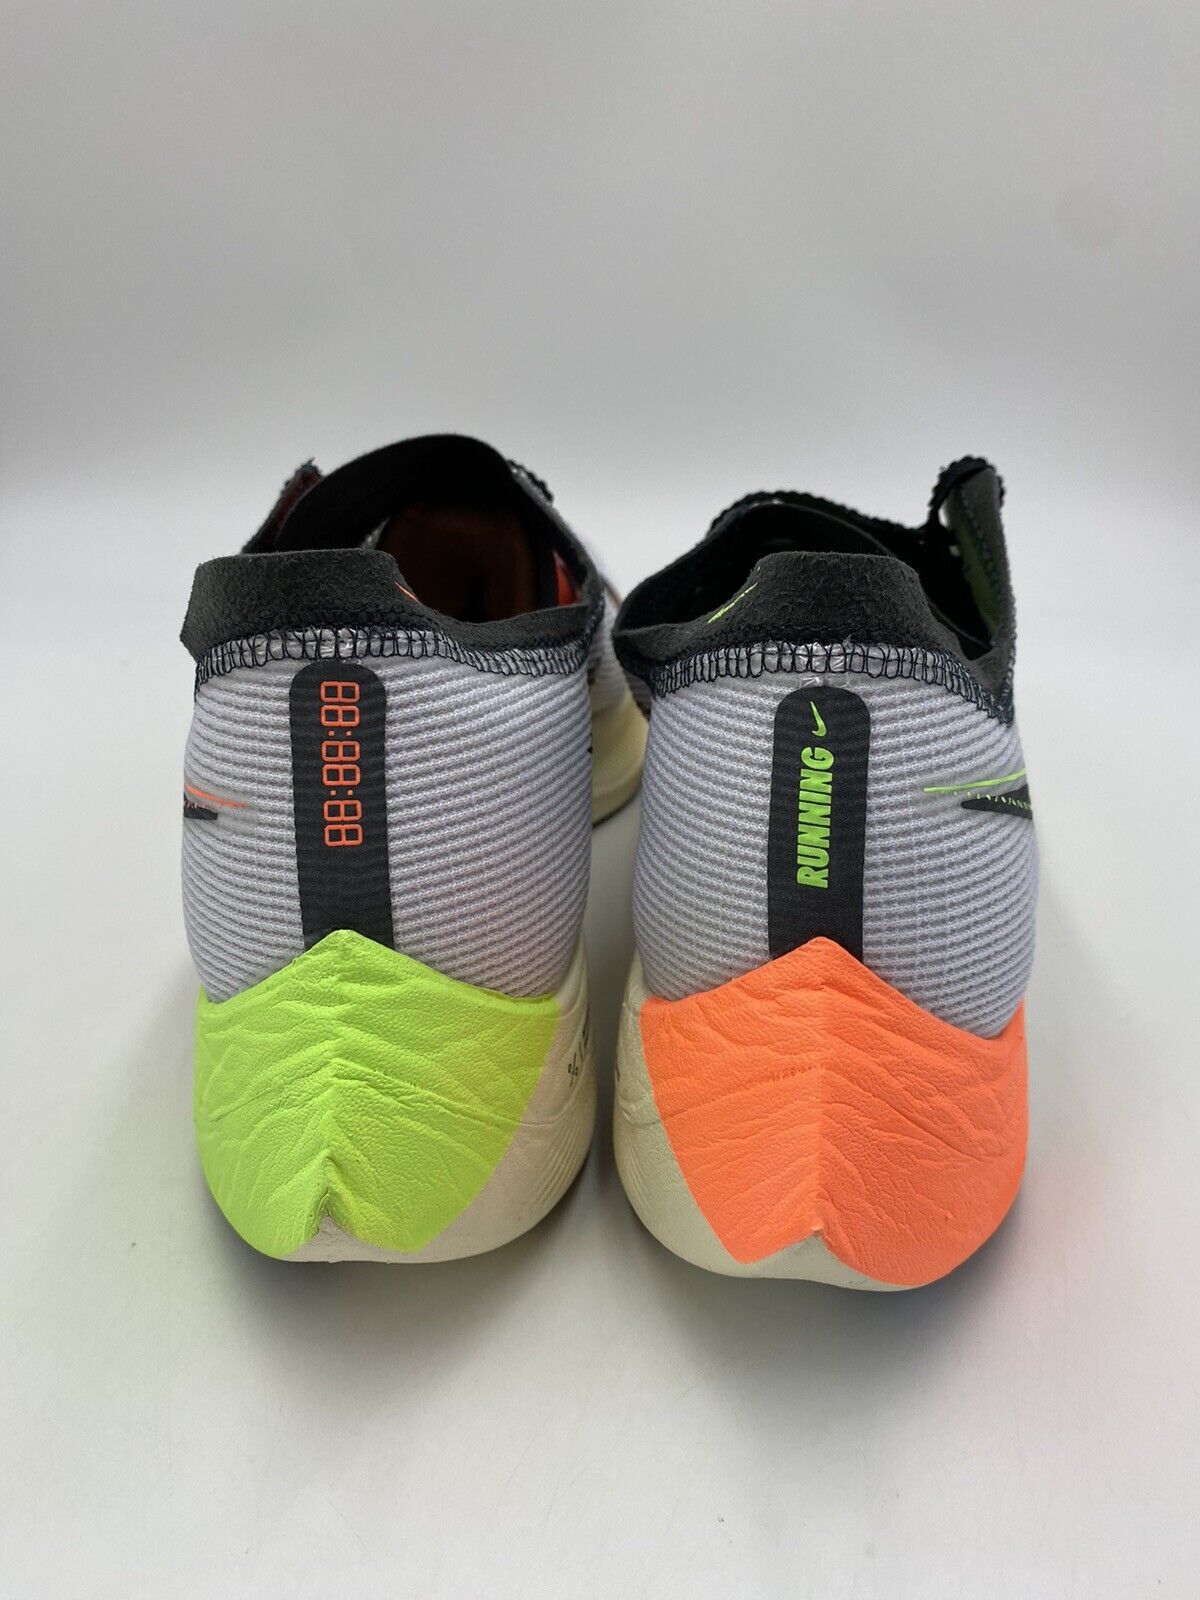 Nike ZoomX Vaporfly Next% 2 White/Black/Orange FB1846-101 Men's Size 11.5